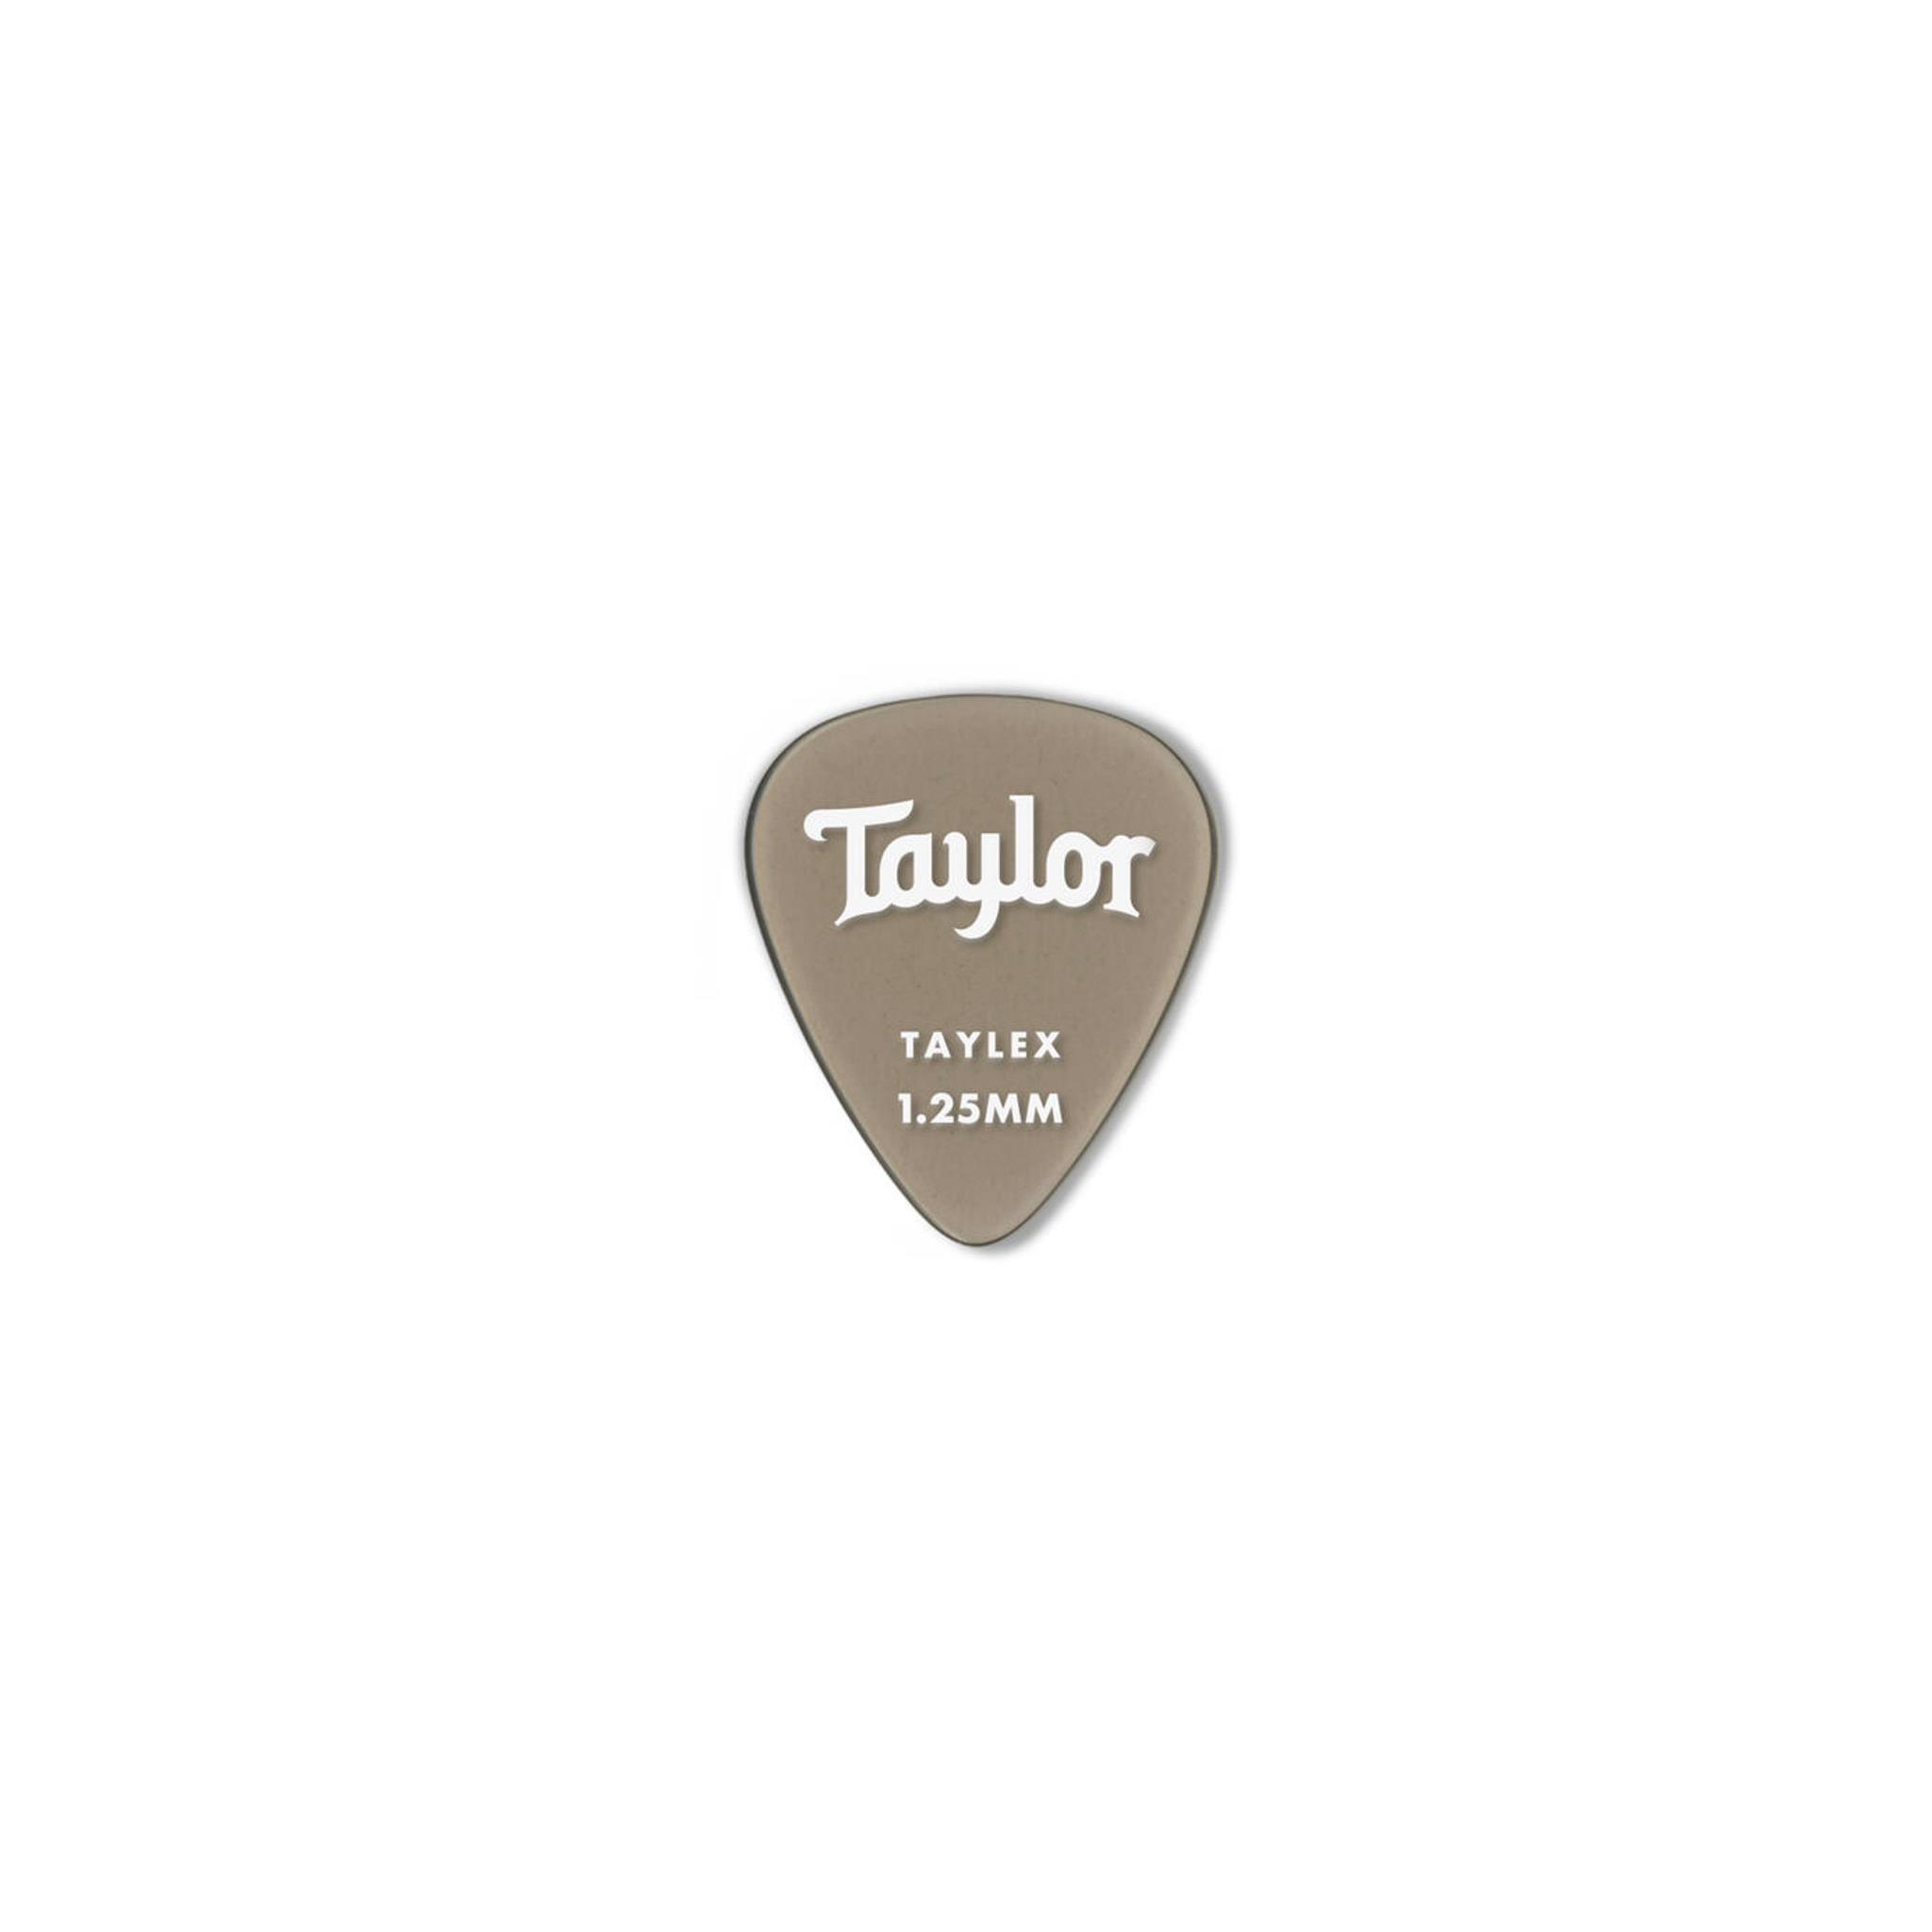 Taylor Premium Taylex 351 1.25 Smoke Grey